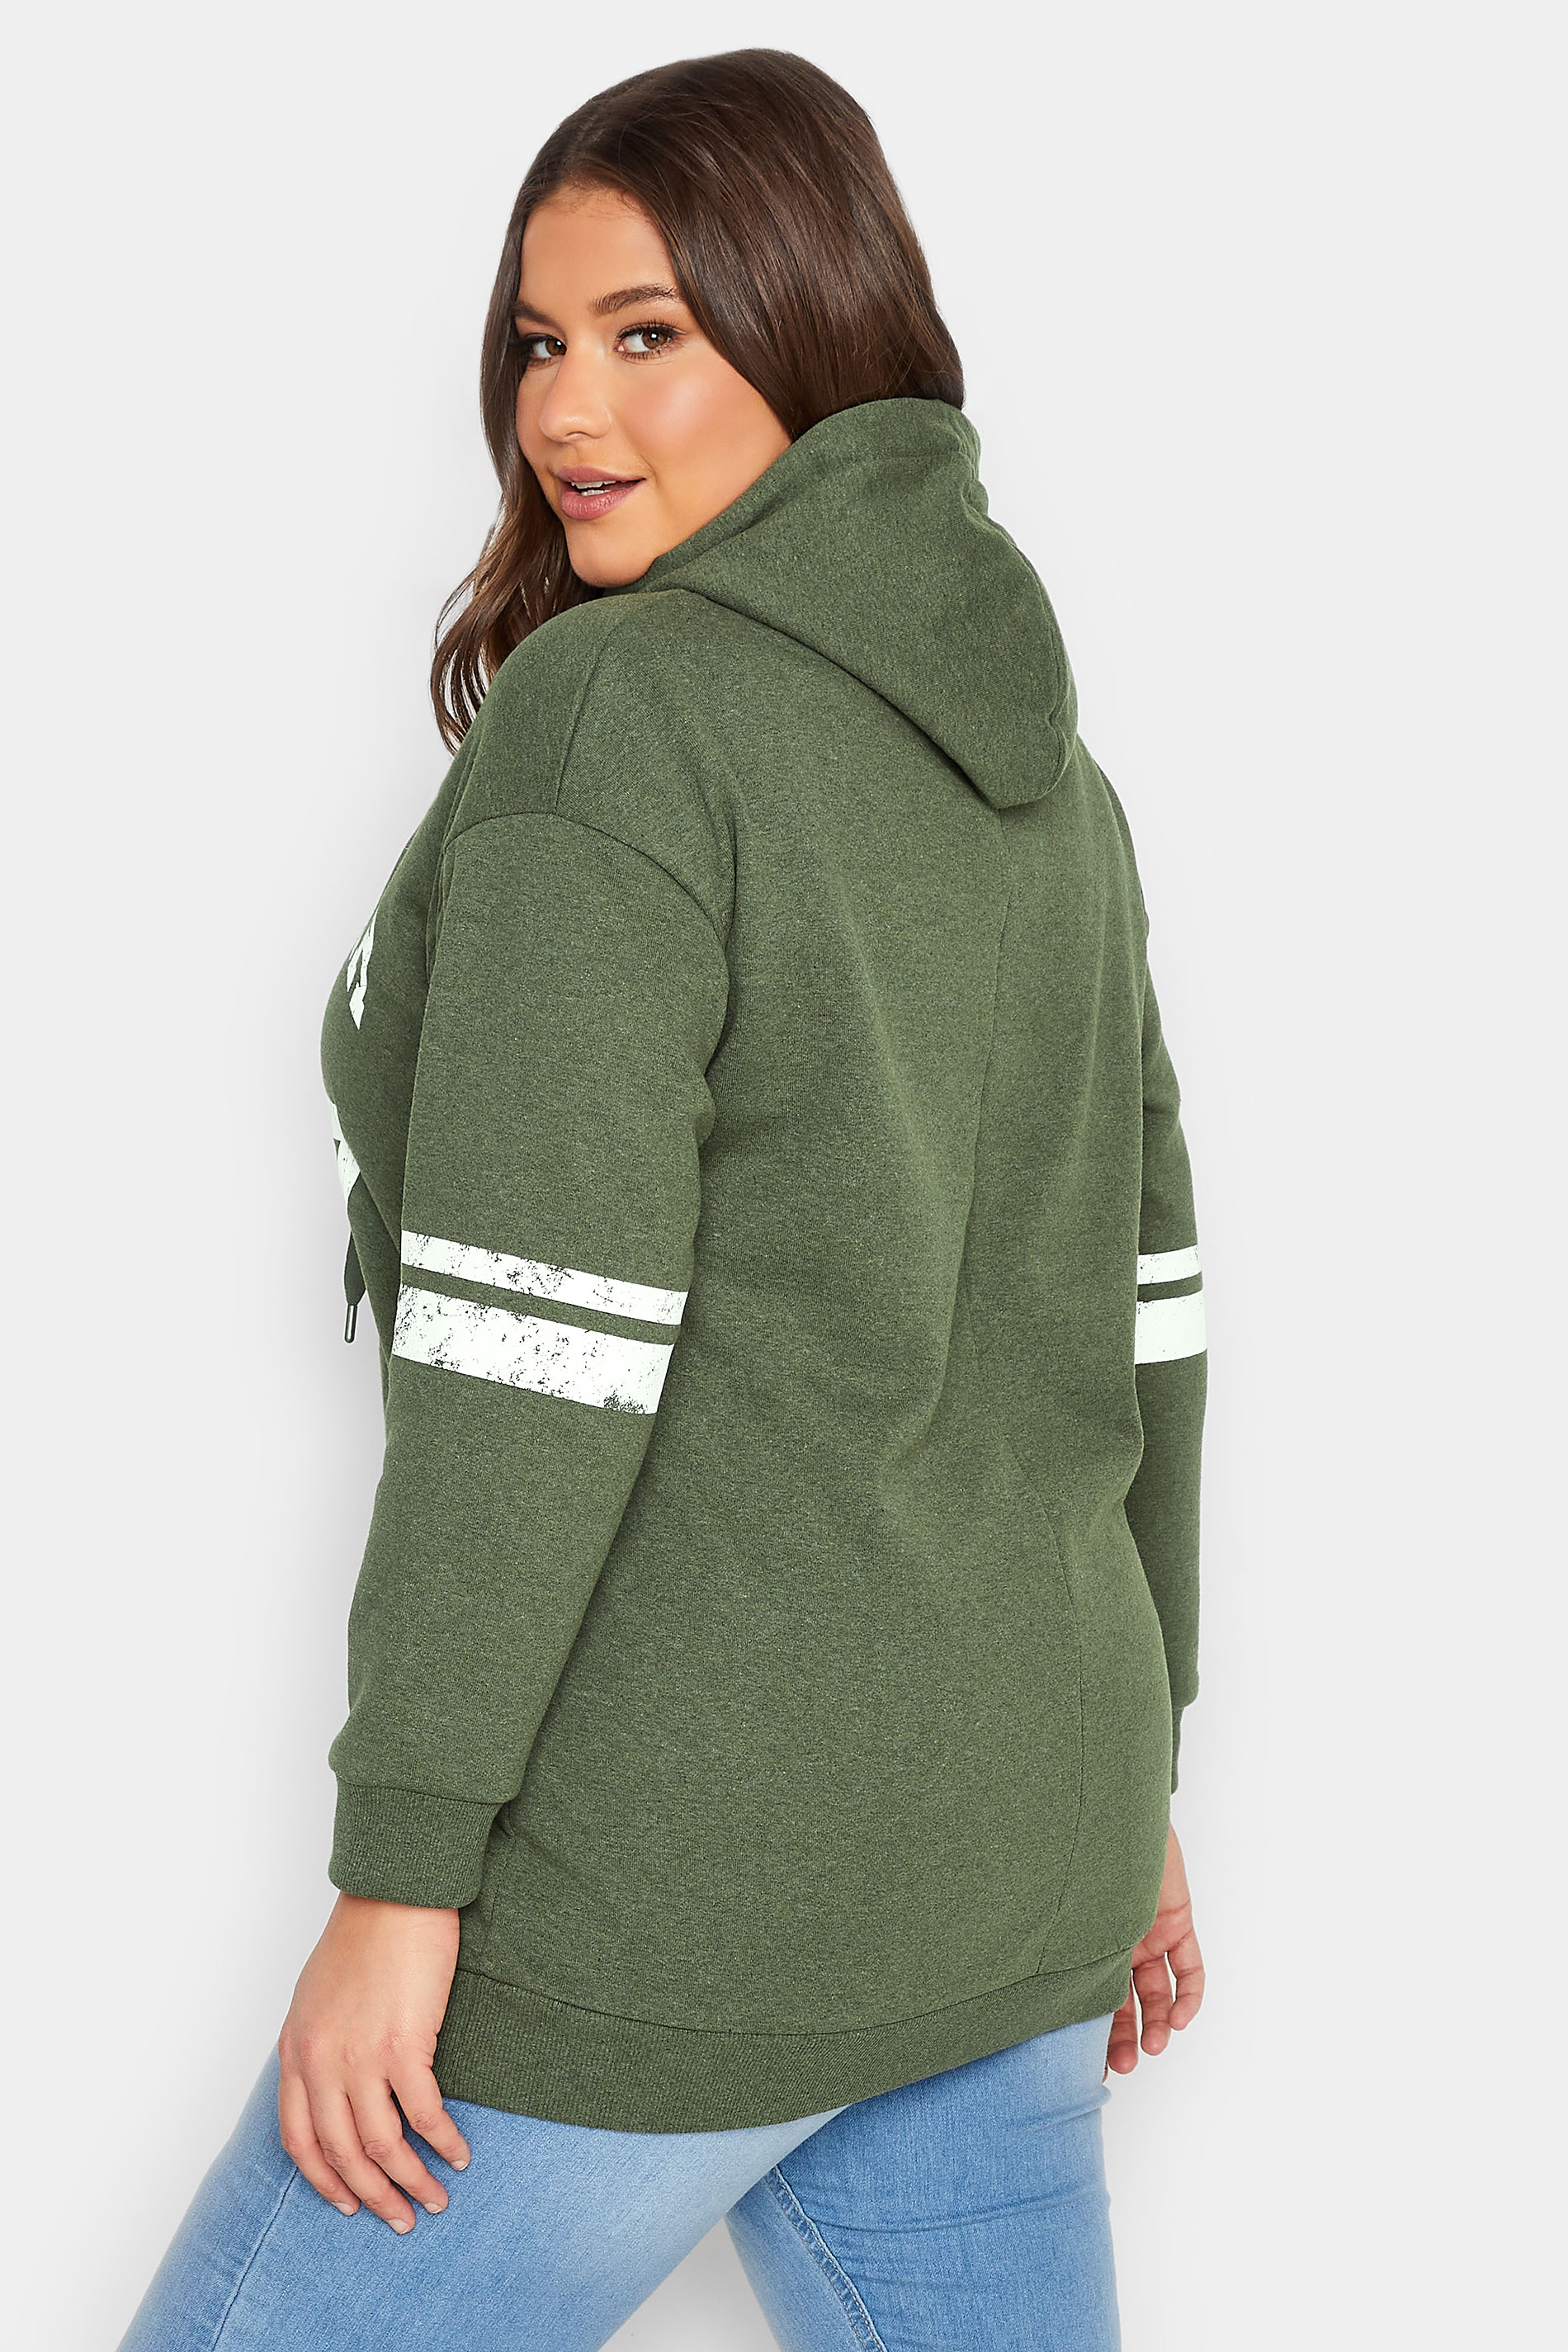 YOURS Plus Size Khaki Green 'California' Varsity Hoodie | Yours Clothing 3